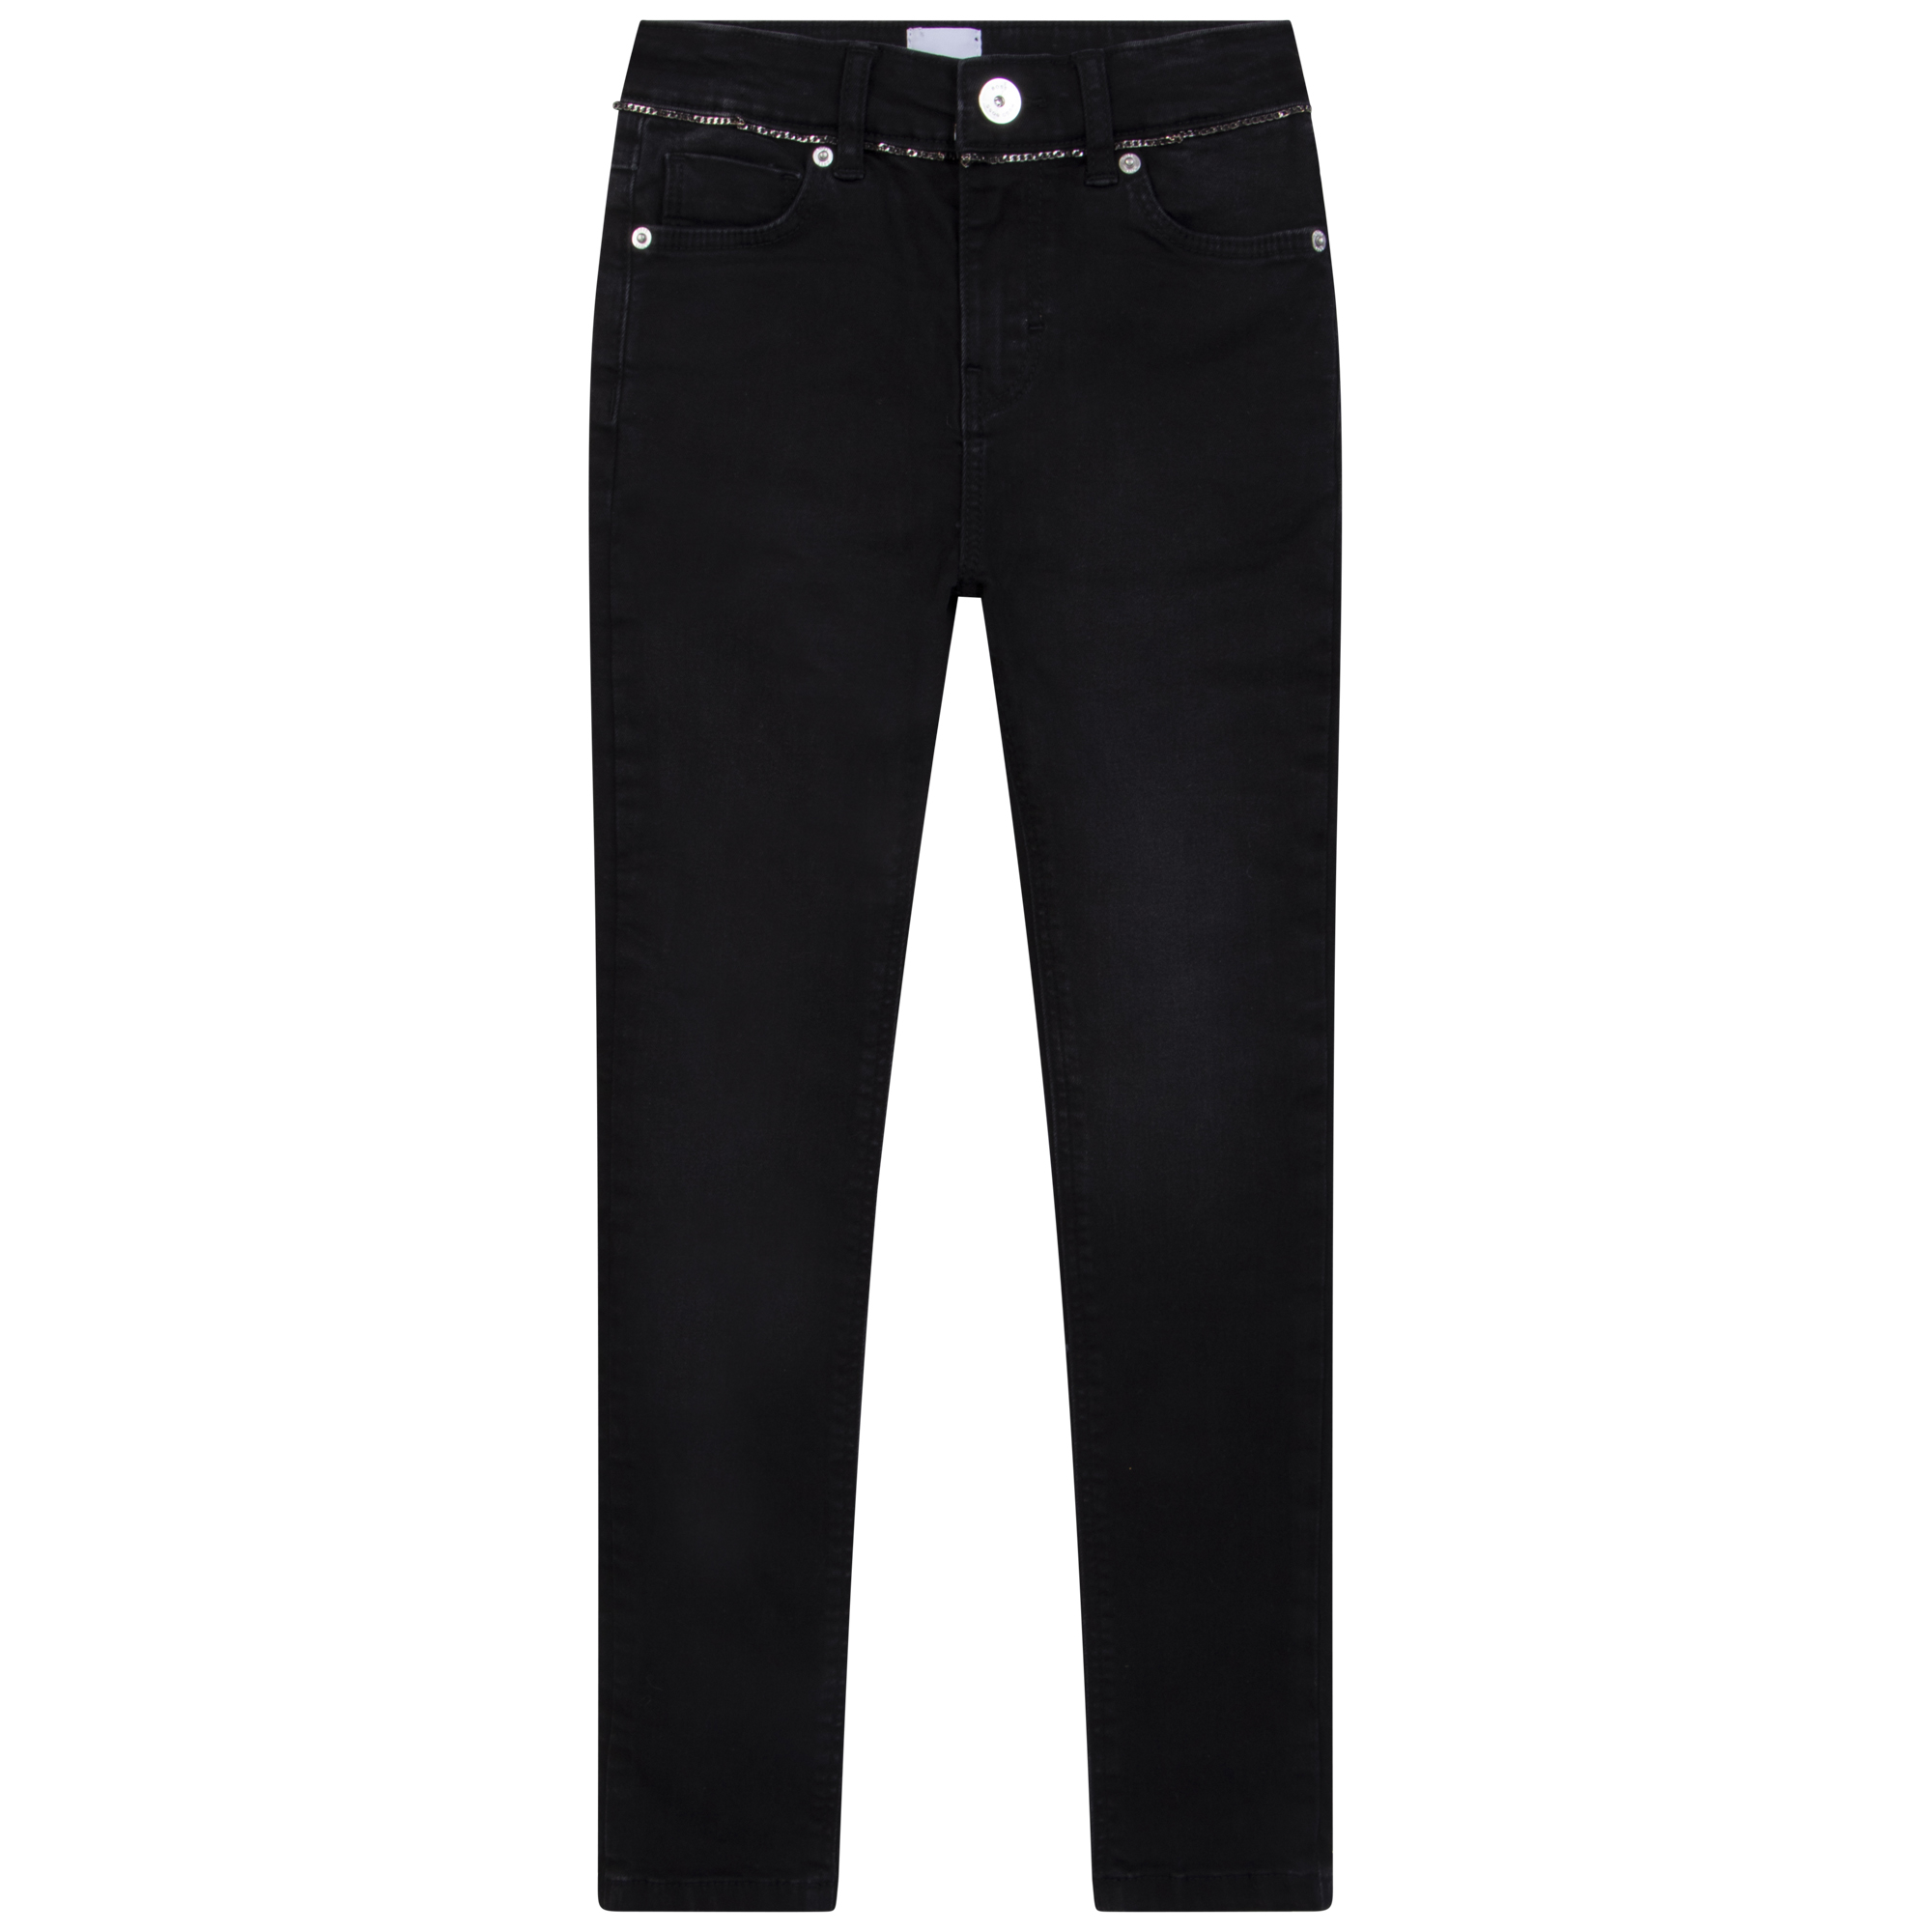 Stretch 5-pocket jeans BOSS for GIRL